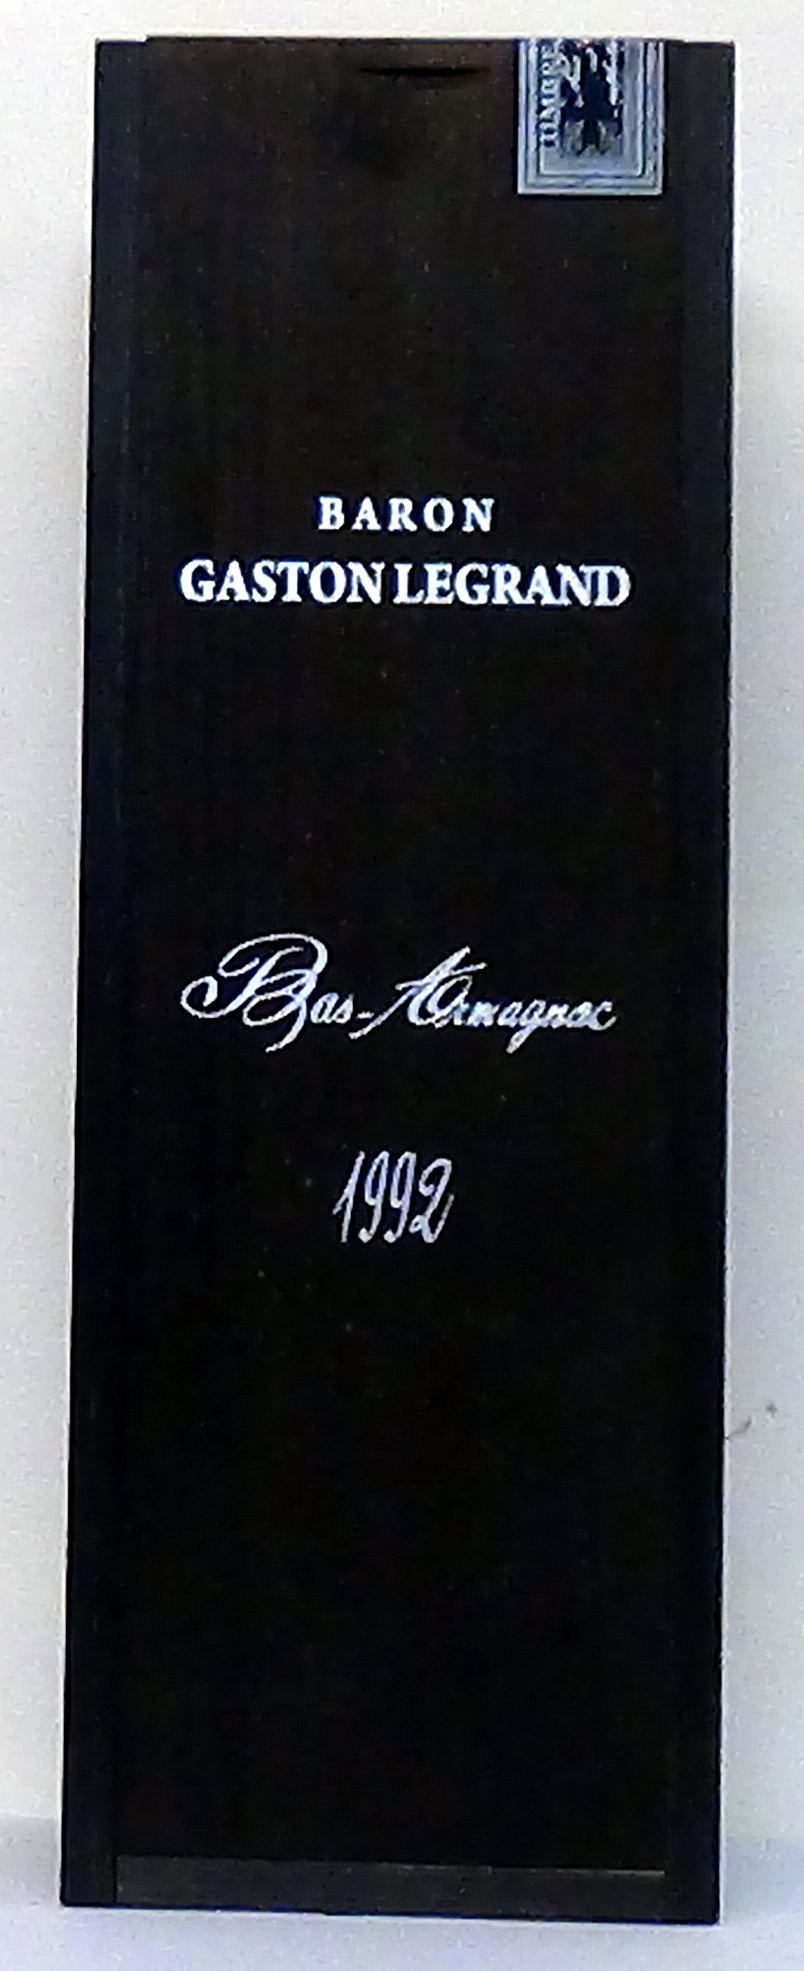 1992 Baron Gaston Legrand Bas Armagnac